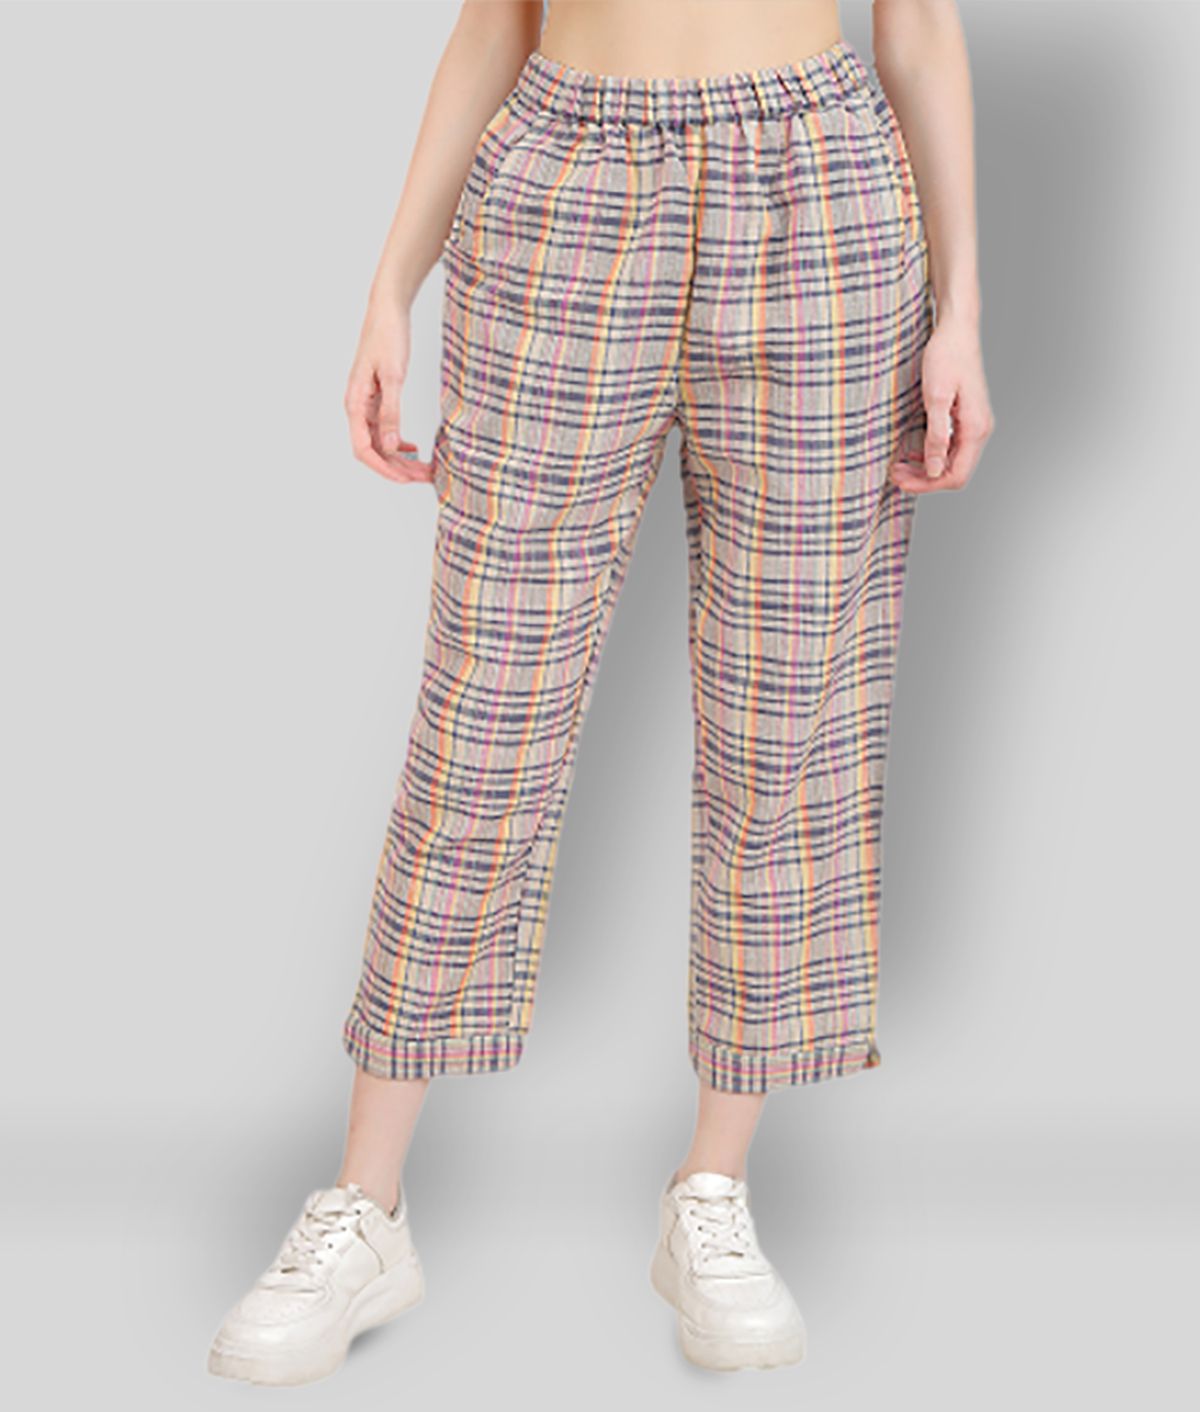 litlu - Multicolor Cotton Blend Loose Fit Women's Casual Pants  ( Pack of 1 )